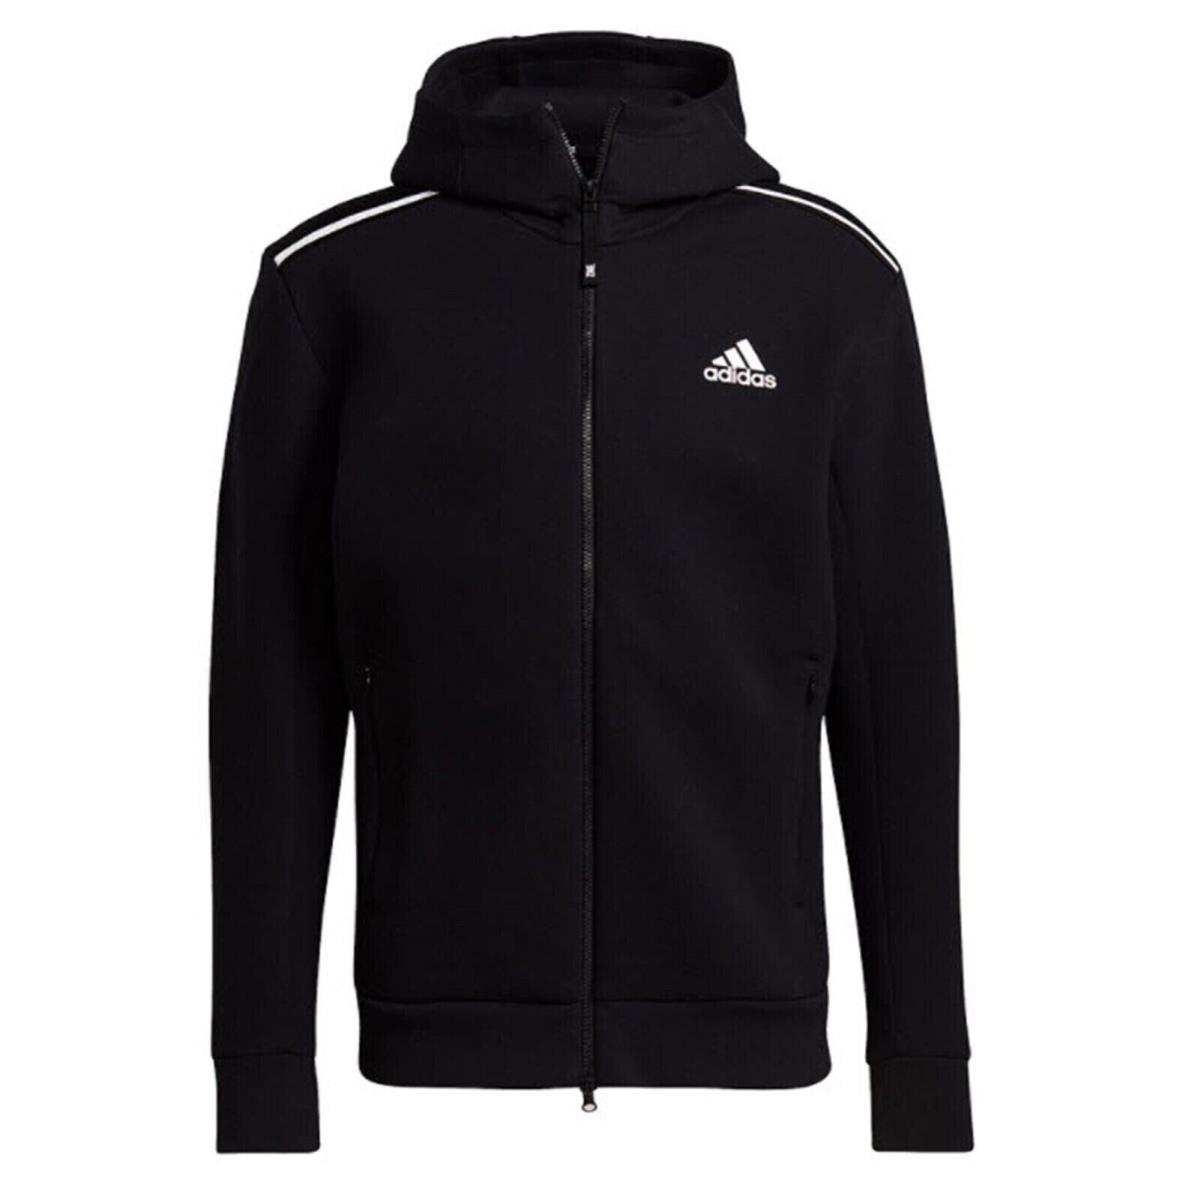 Adidas Zne Hoodie Sweatshirt Full Zip Black GT9780 Mens Size XL